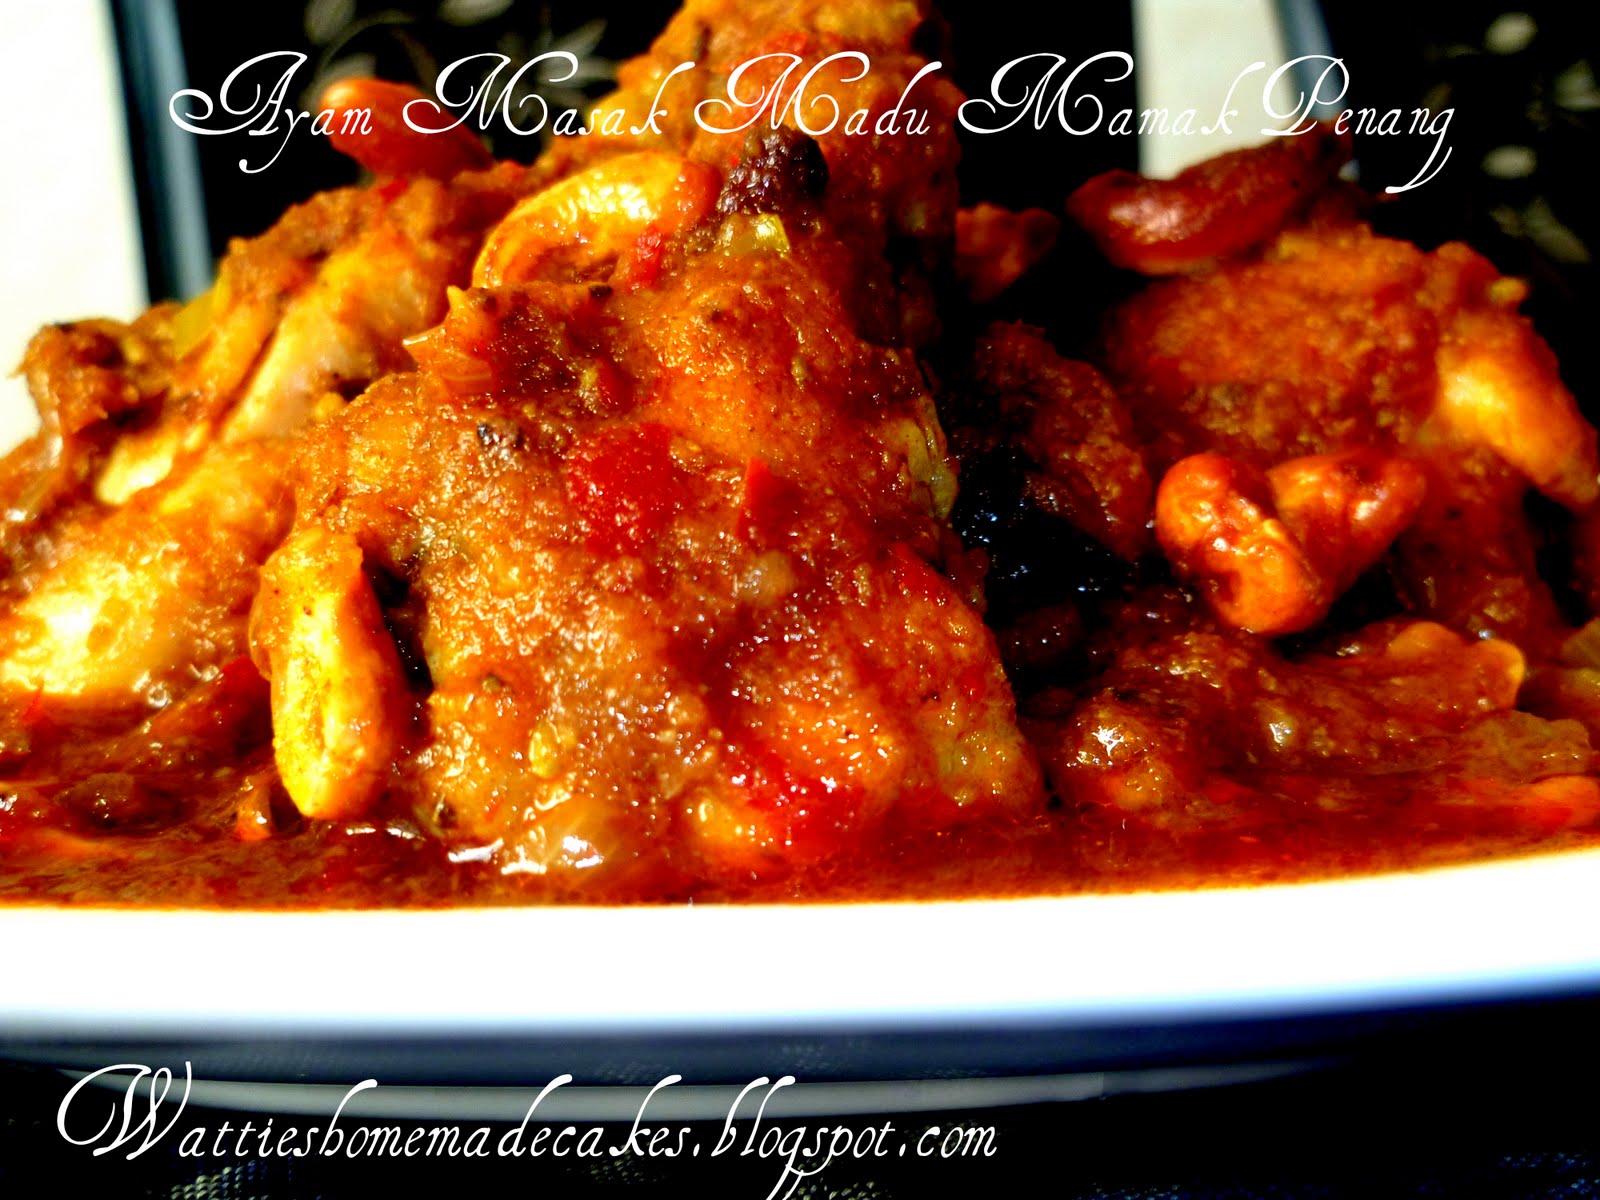 Wattie's HomeMade Ayam Masak Madu Nasi Kandar